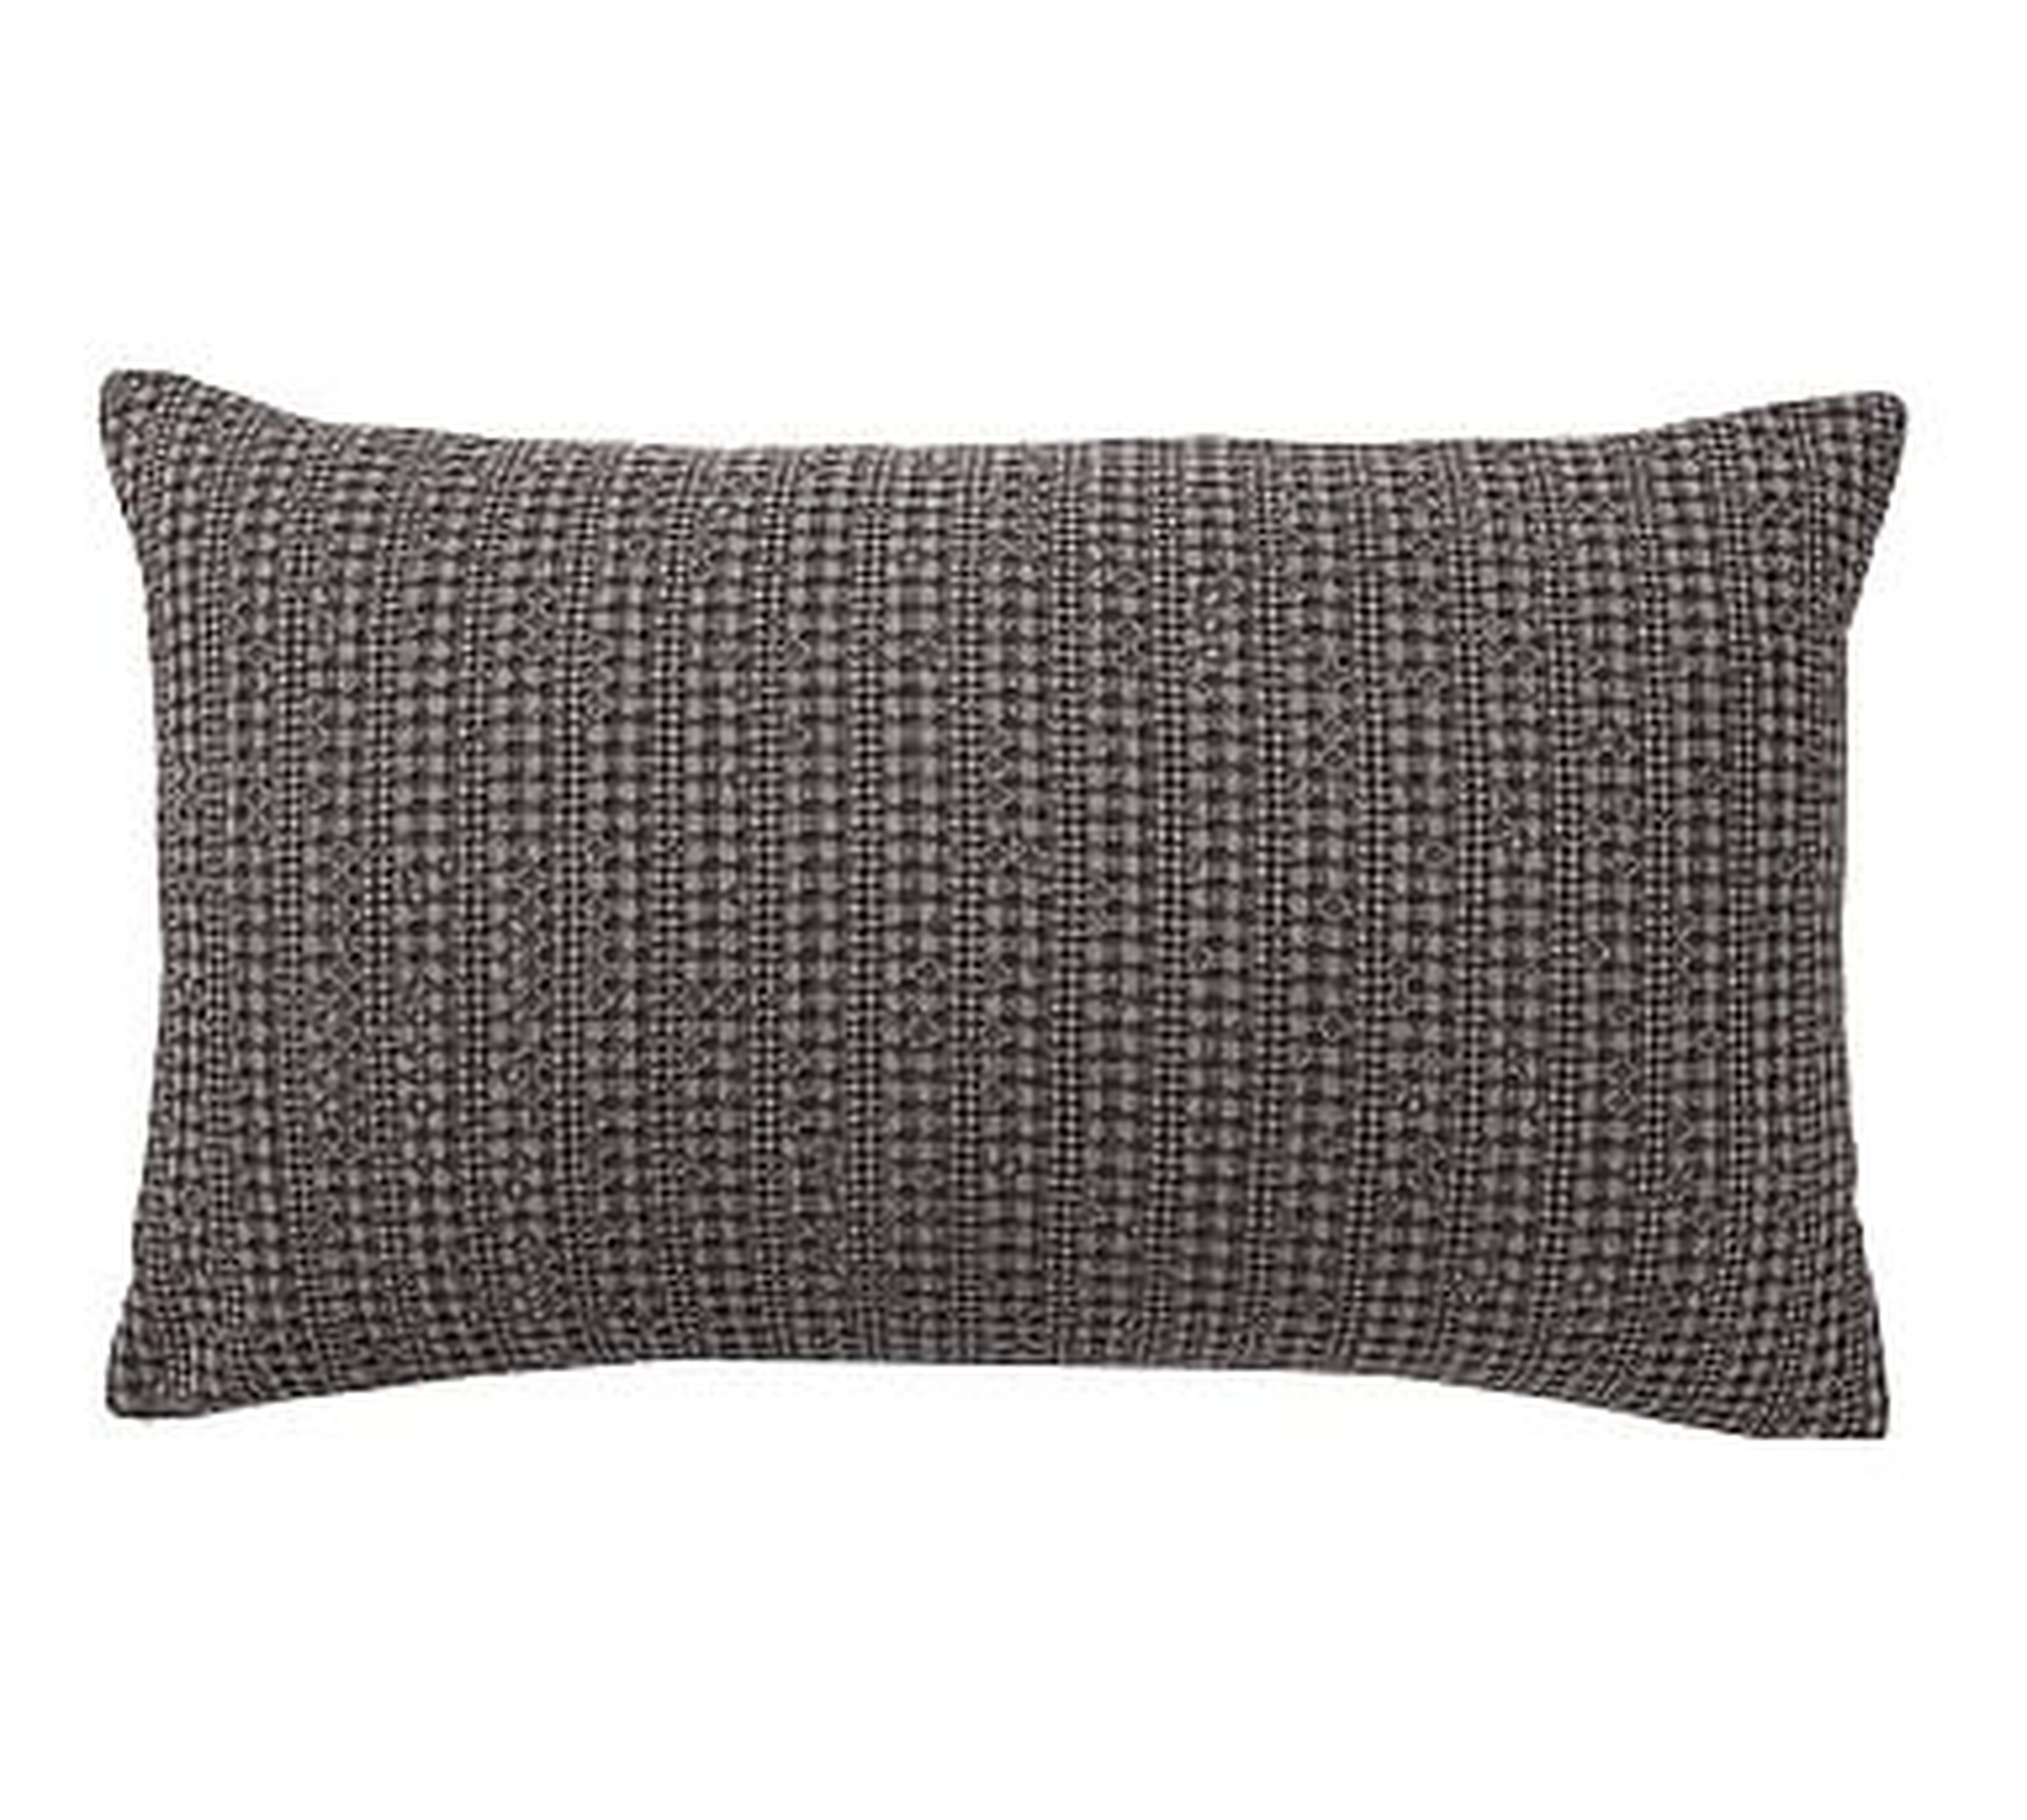 Honeycomb Lumbar Pillow Cover, 16x26", Ebony - Pottery Barn